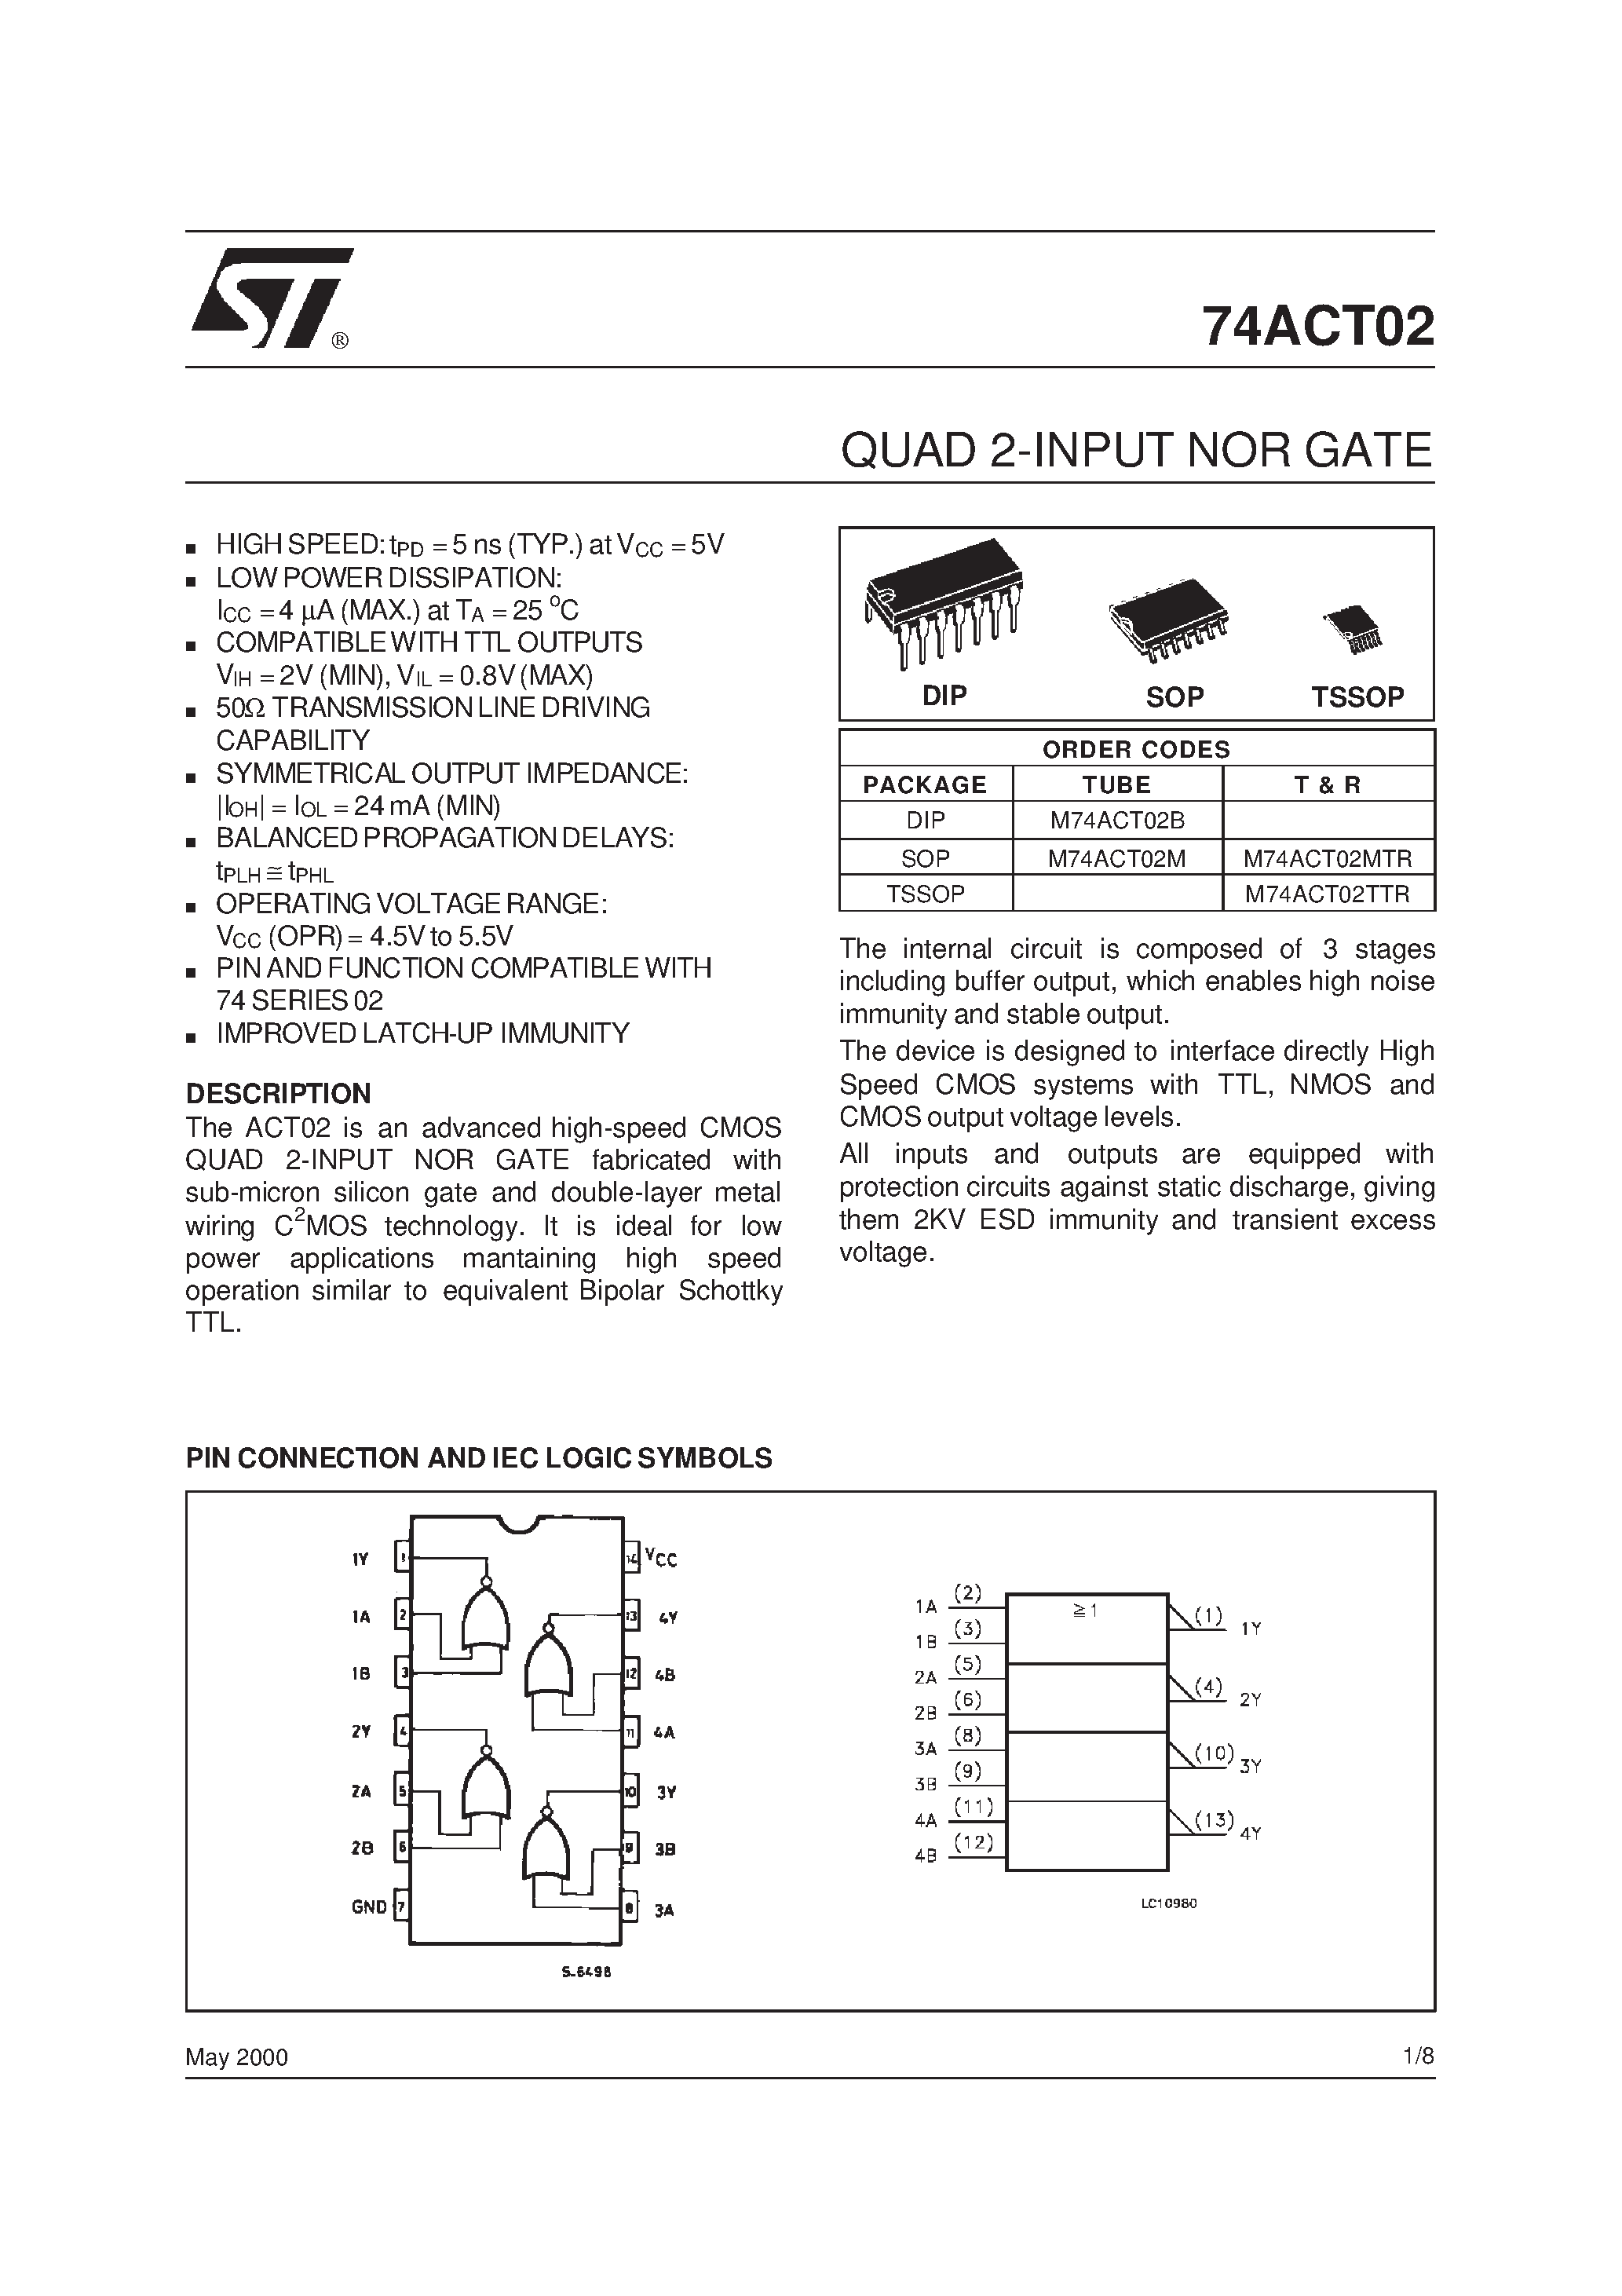 Datasheet M74ACT02M - QUAD 2-INPUT NOR GATE page 1